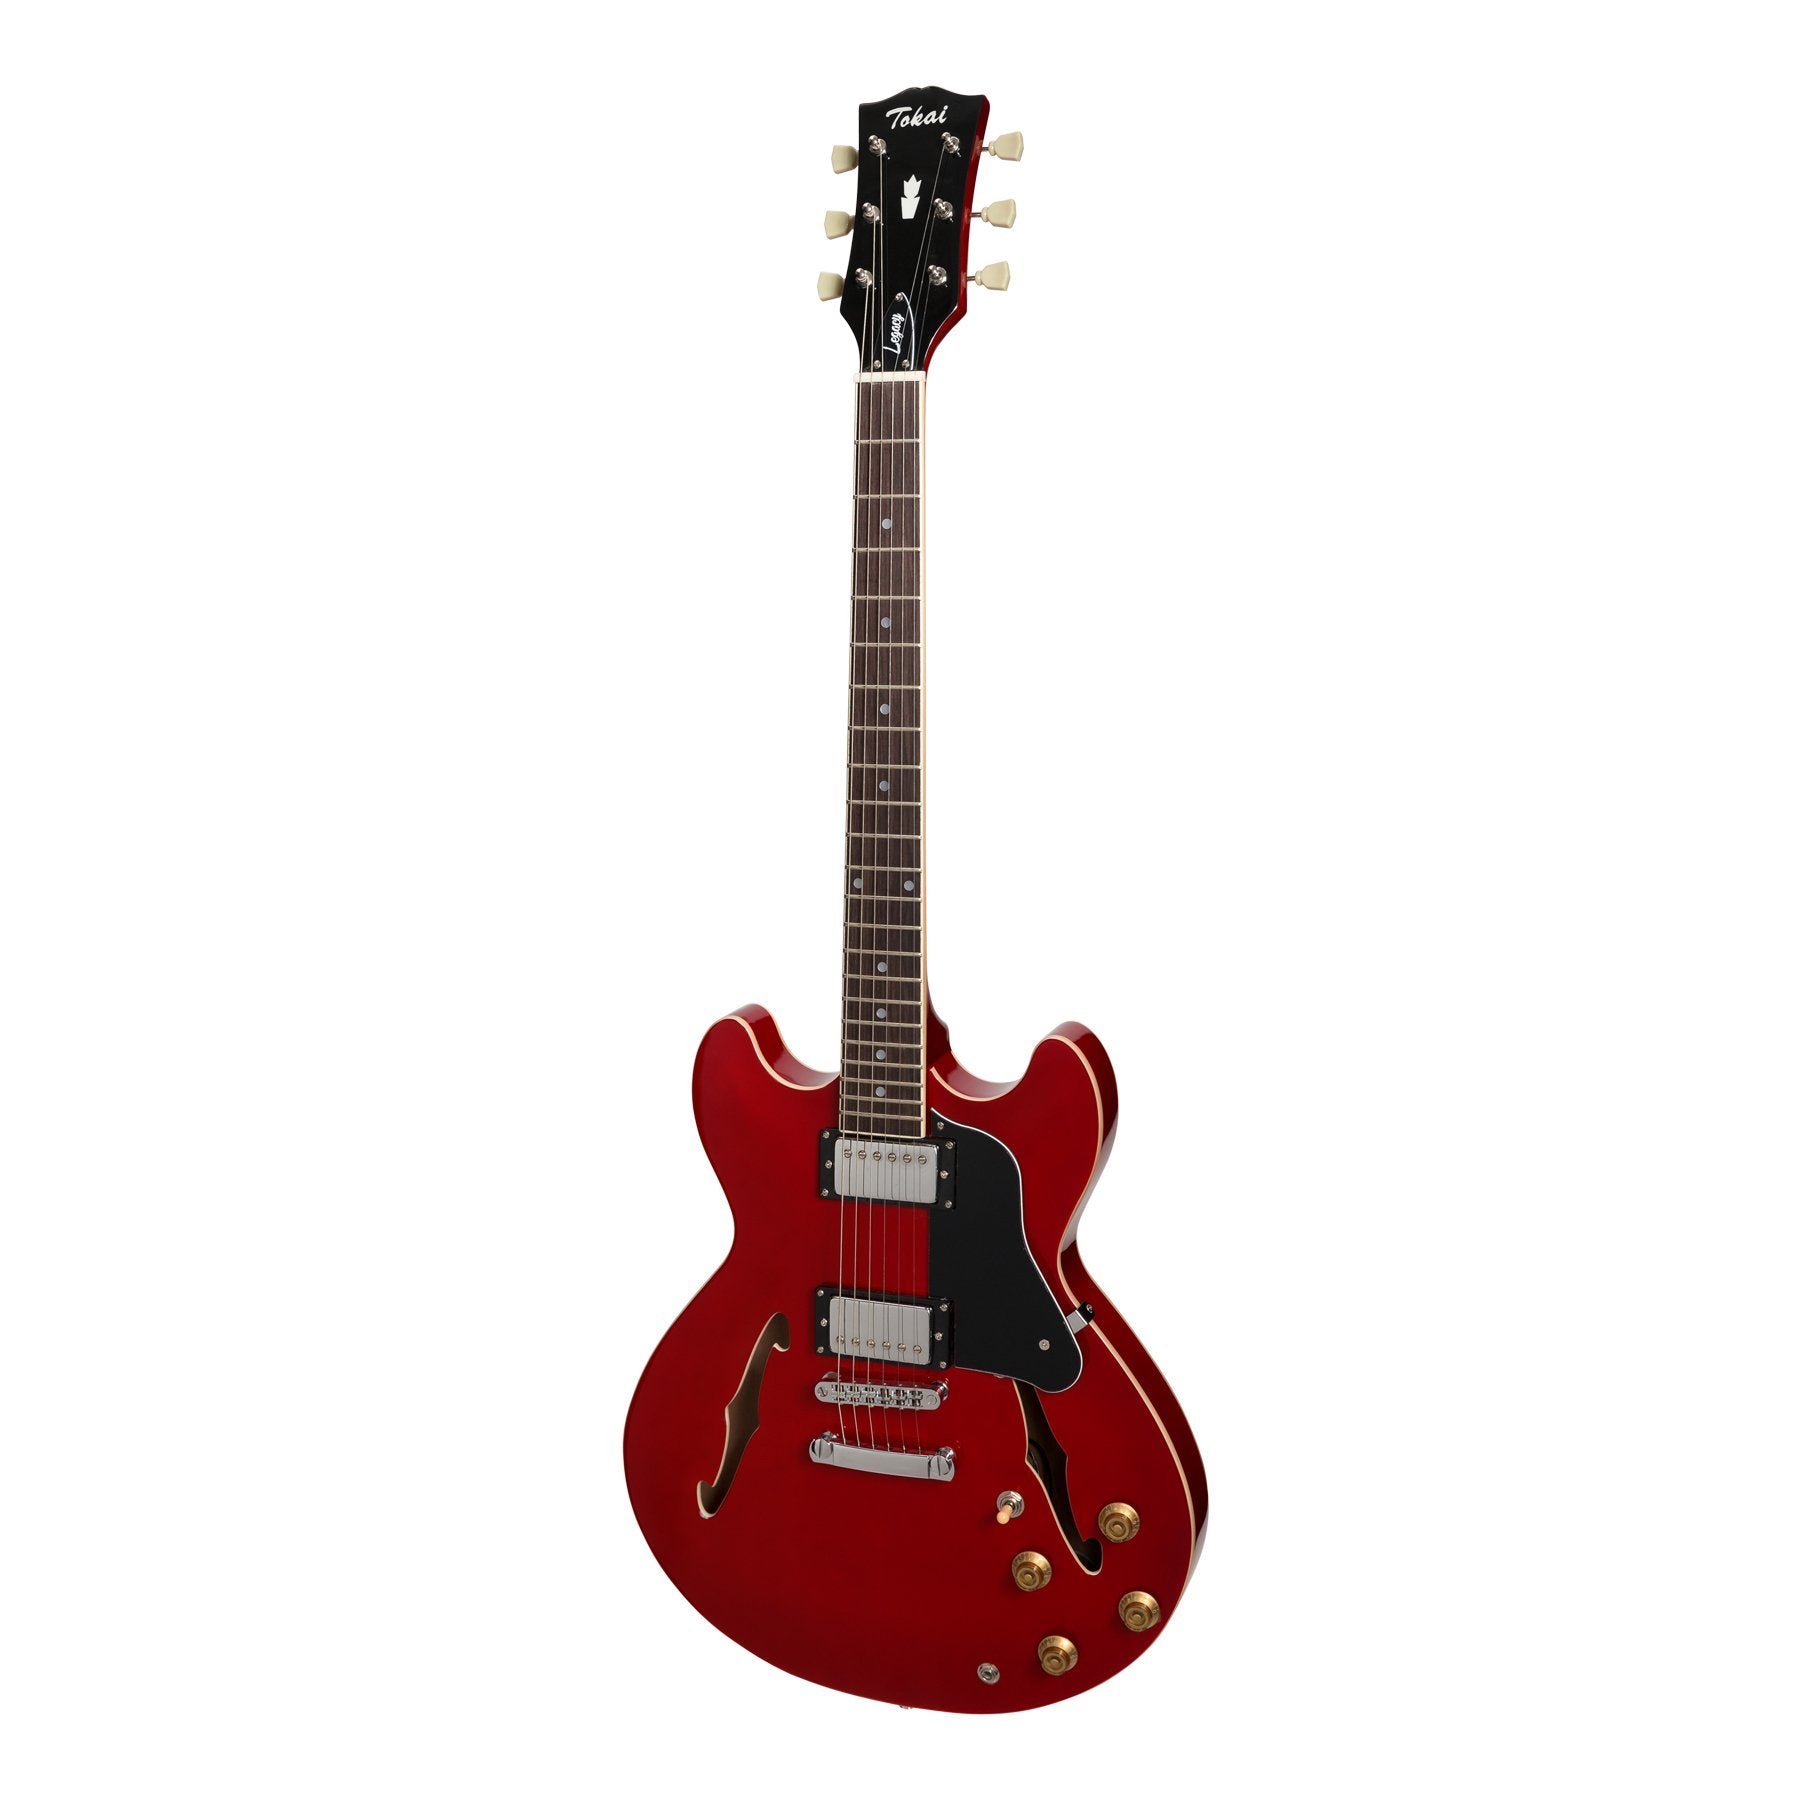 Tokai Legacy ES Style Electric Guitar (Cherry) - Musiclandshop